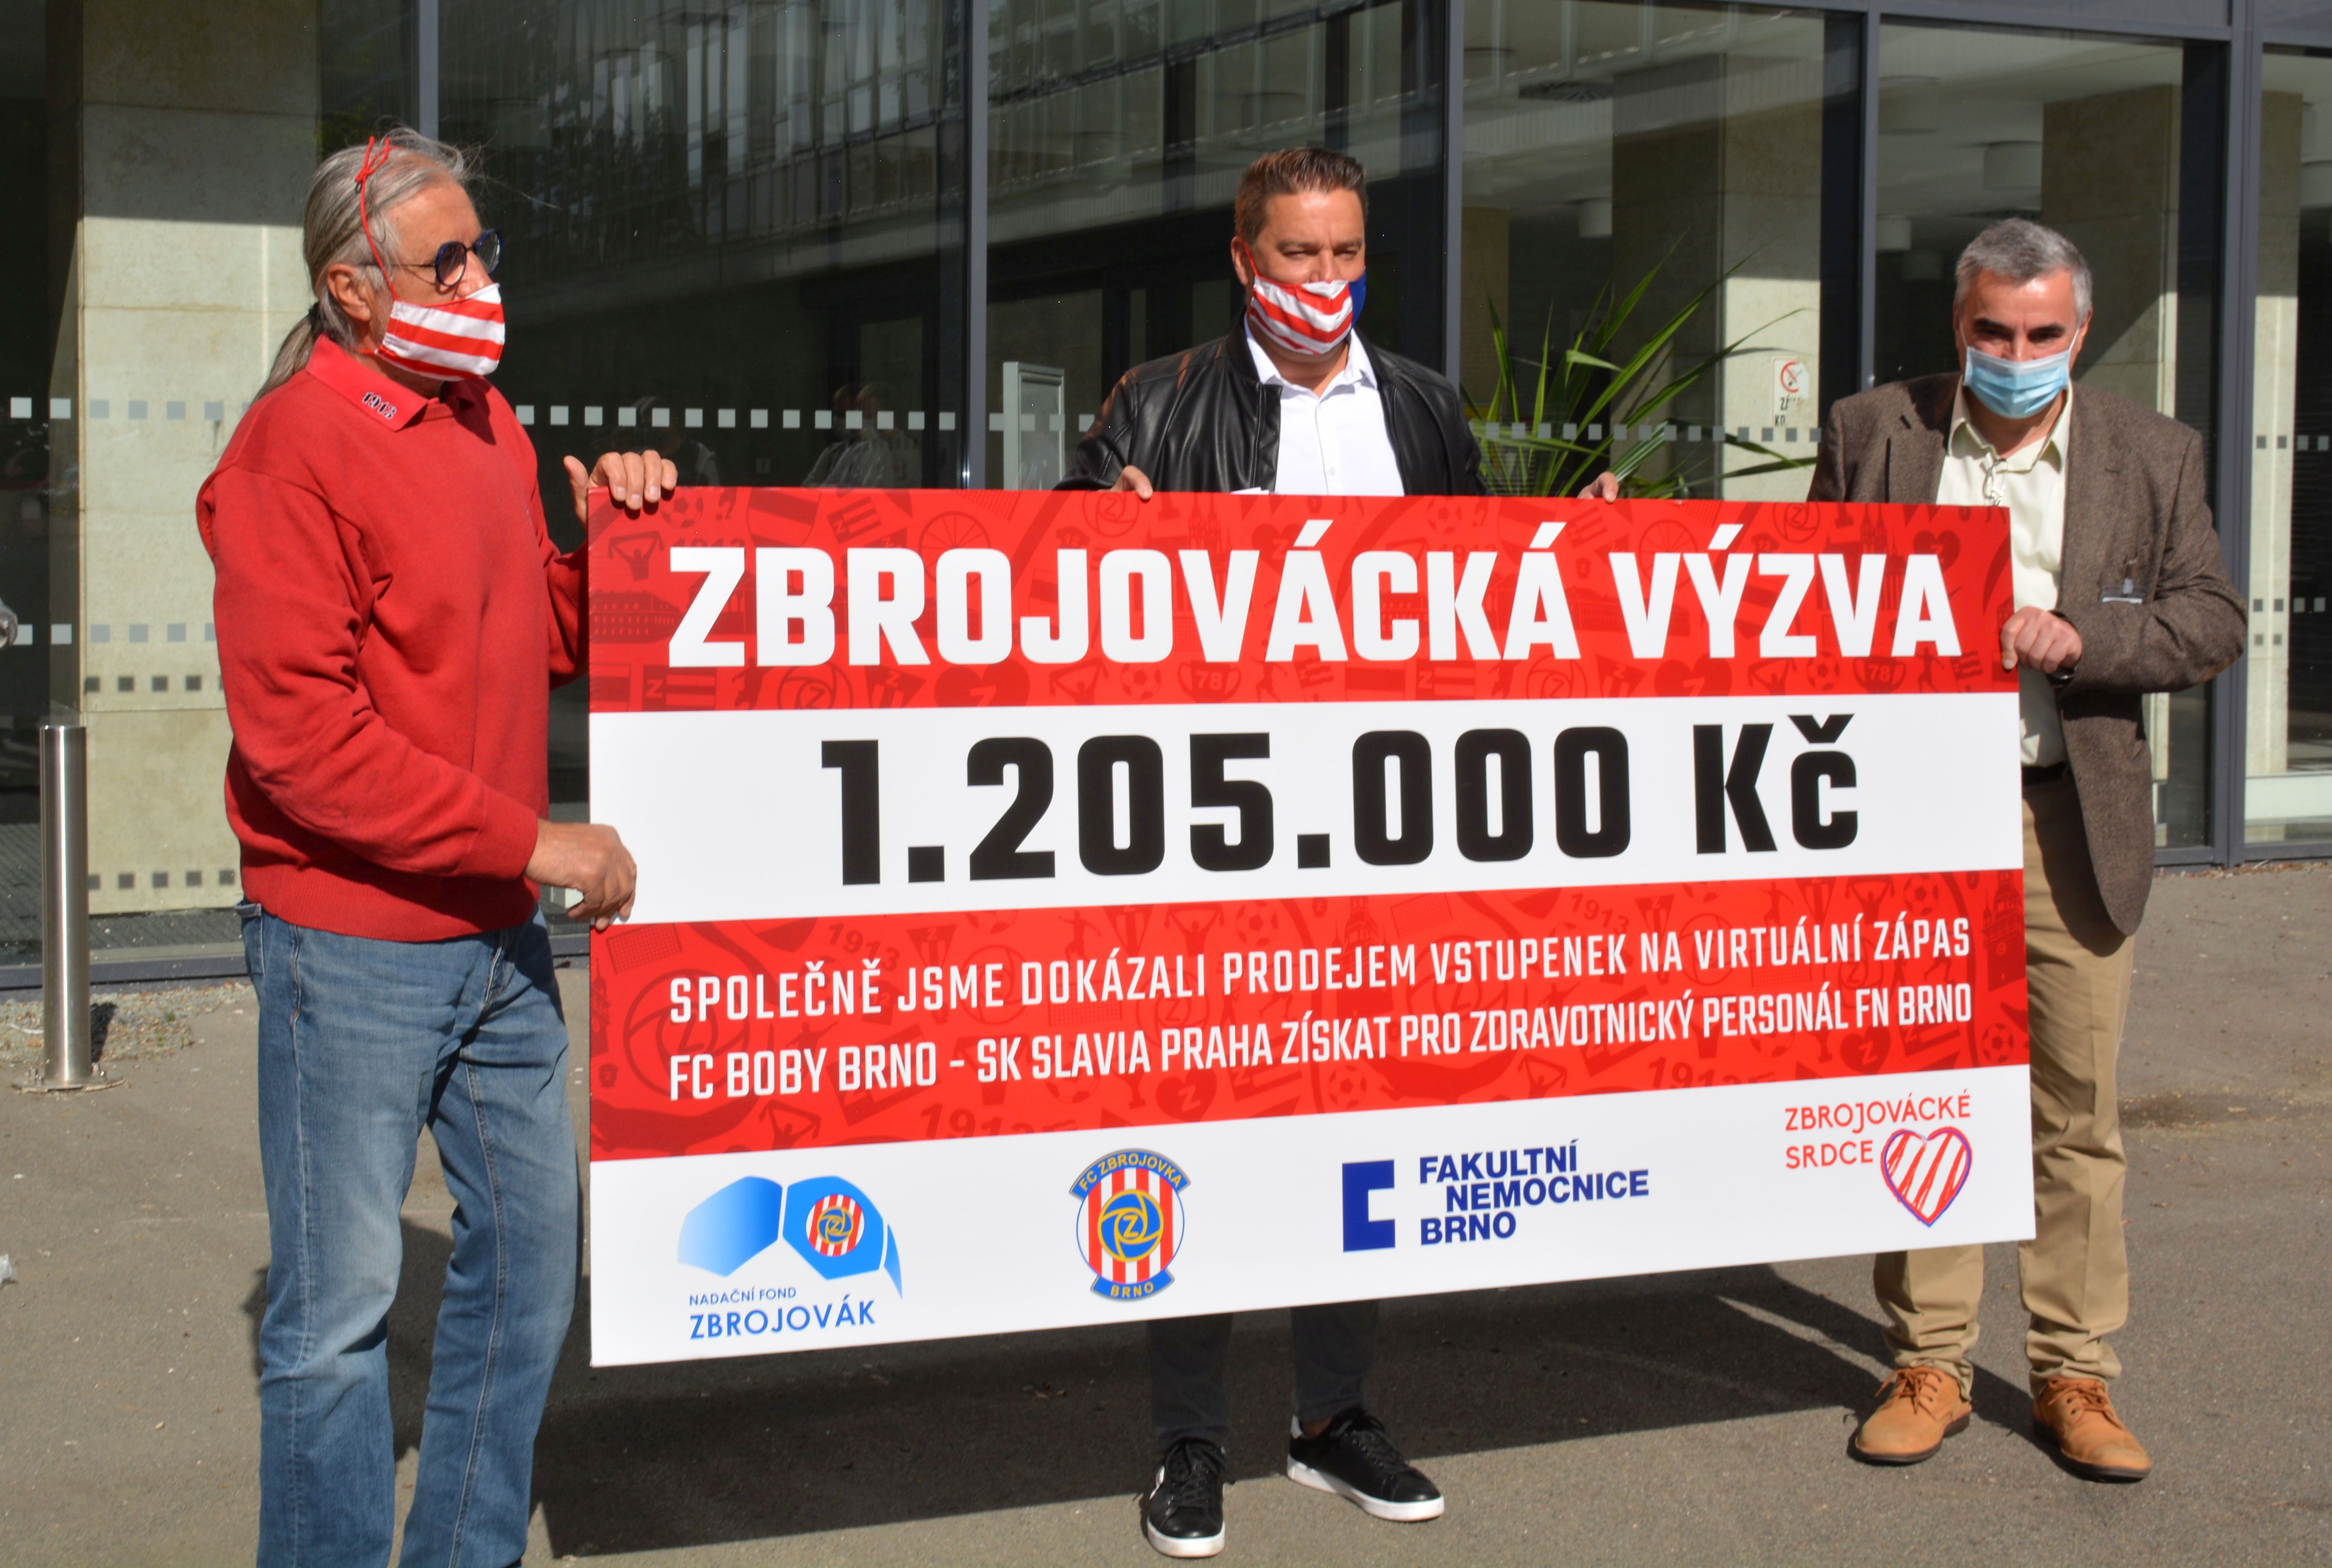 VIDEO: Zbrojovck vzva vynesla 1,2 milionu korun! ek jsme dnes pedali FN Brno